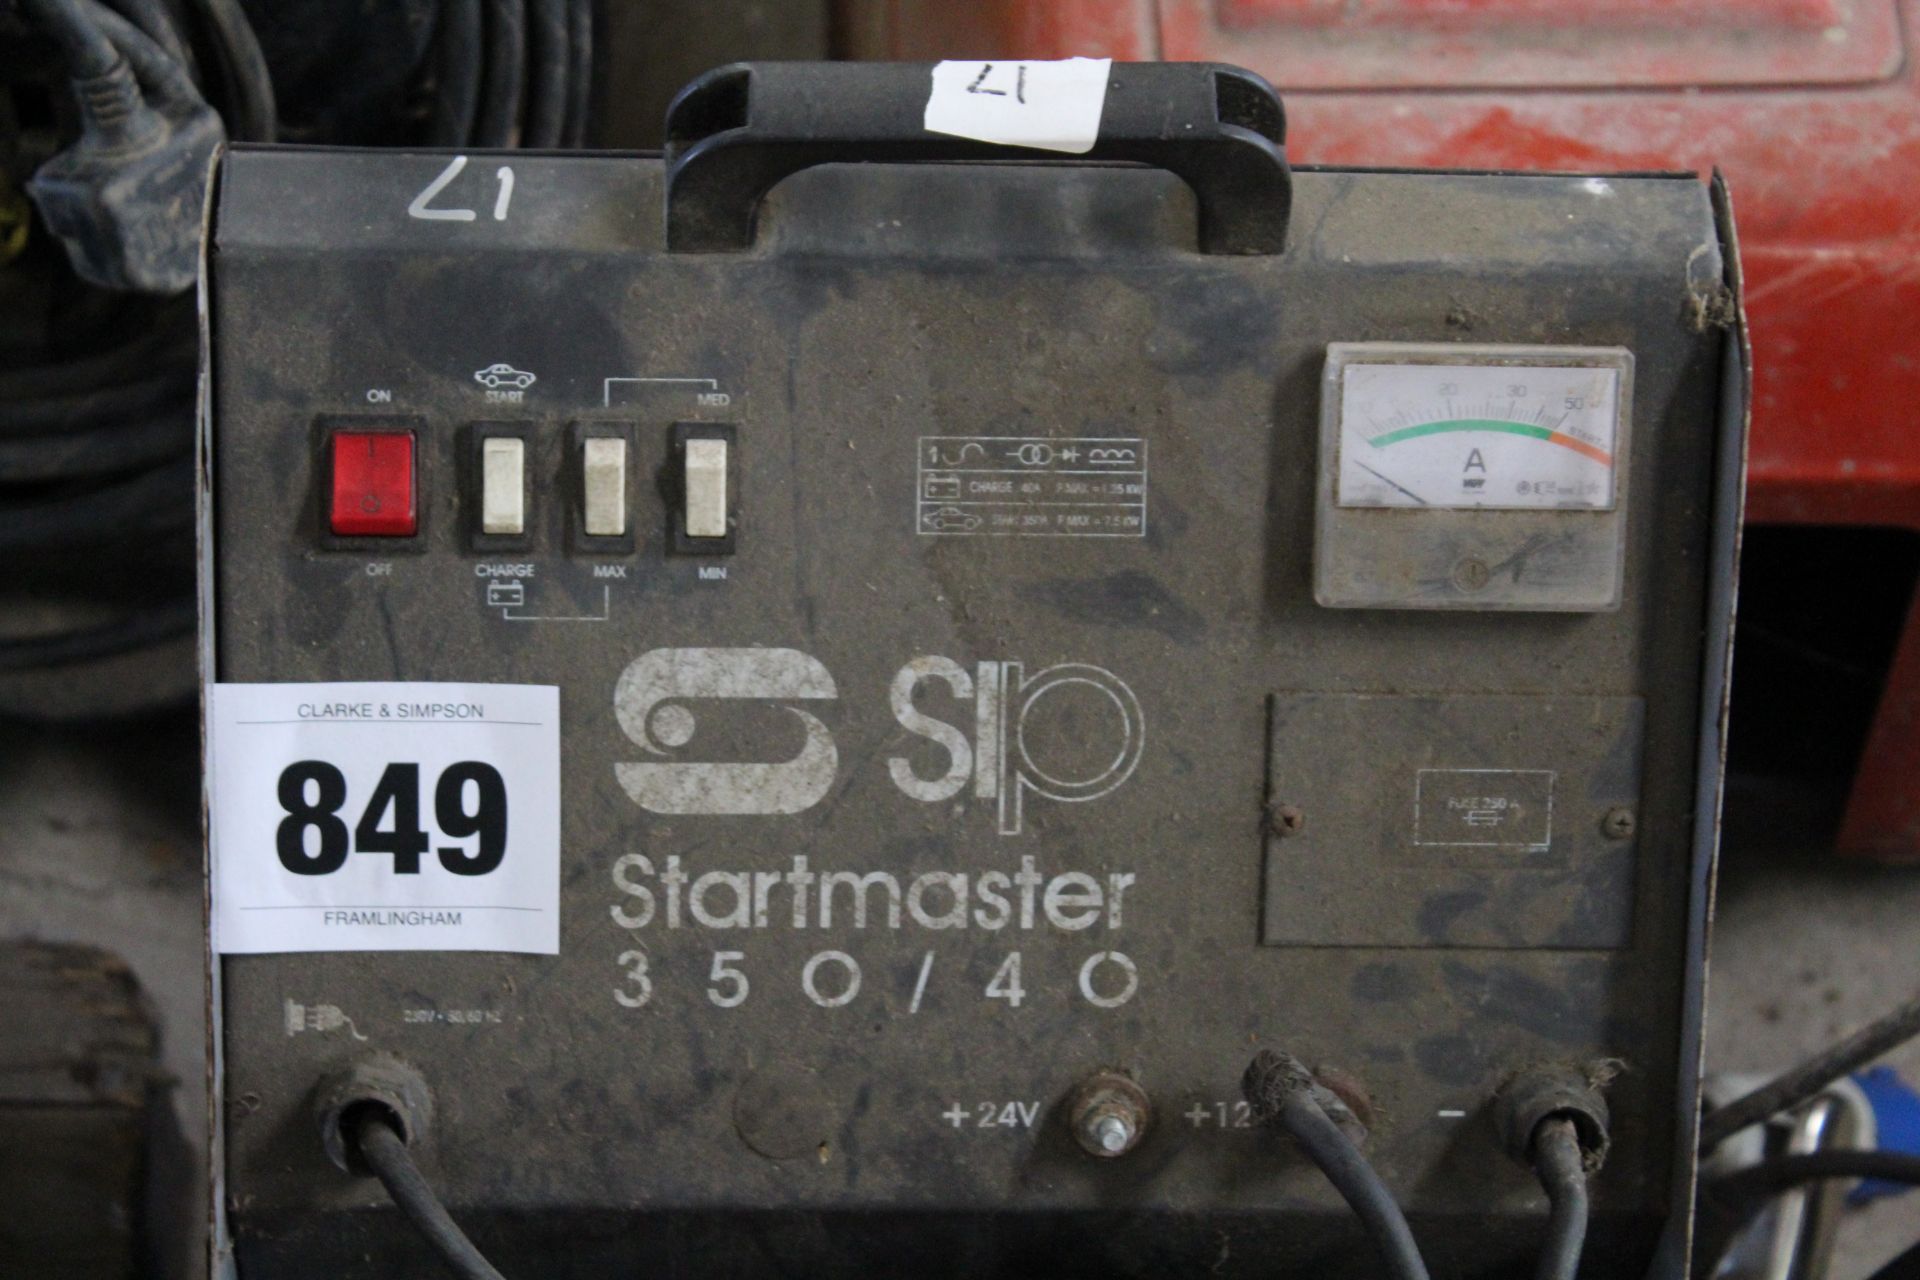 SIP Start Master 350/40. V - Image 2 of 3